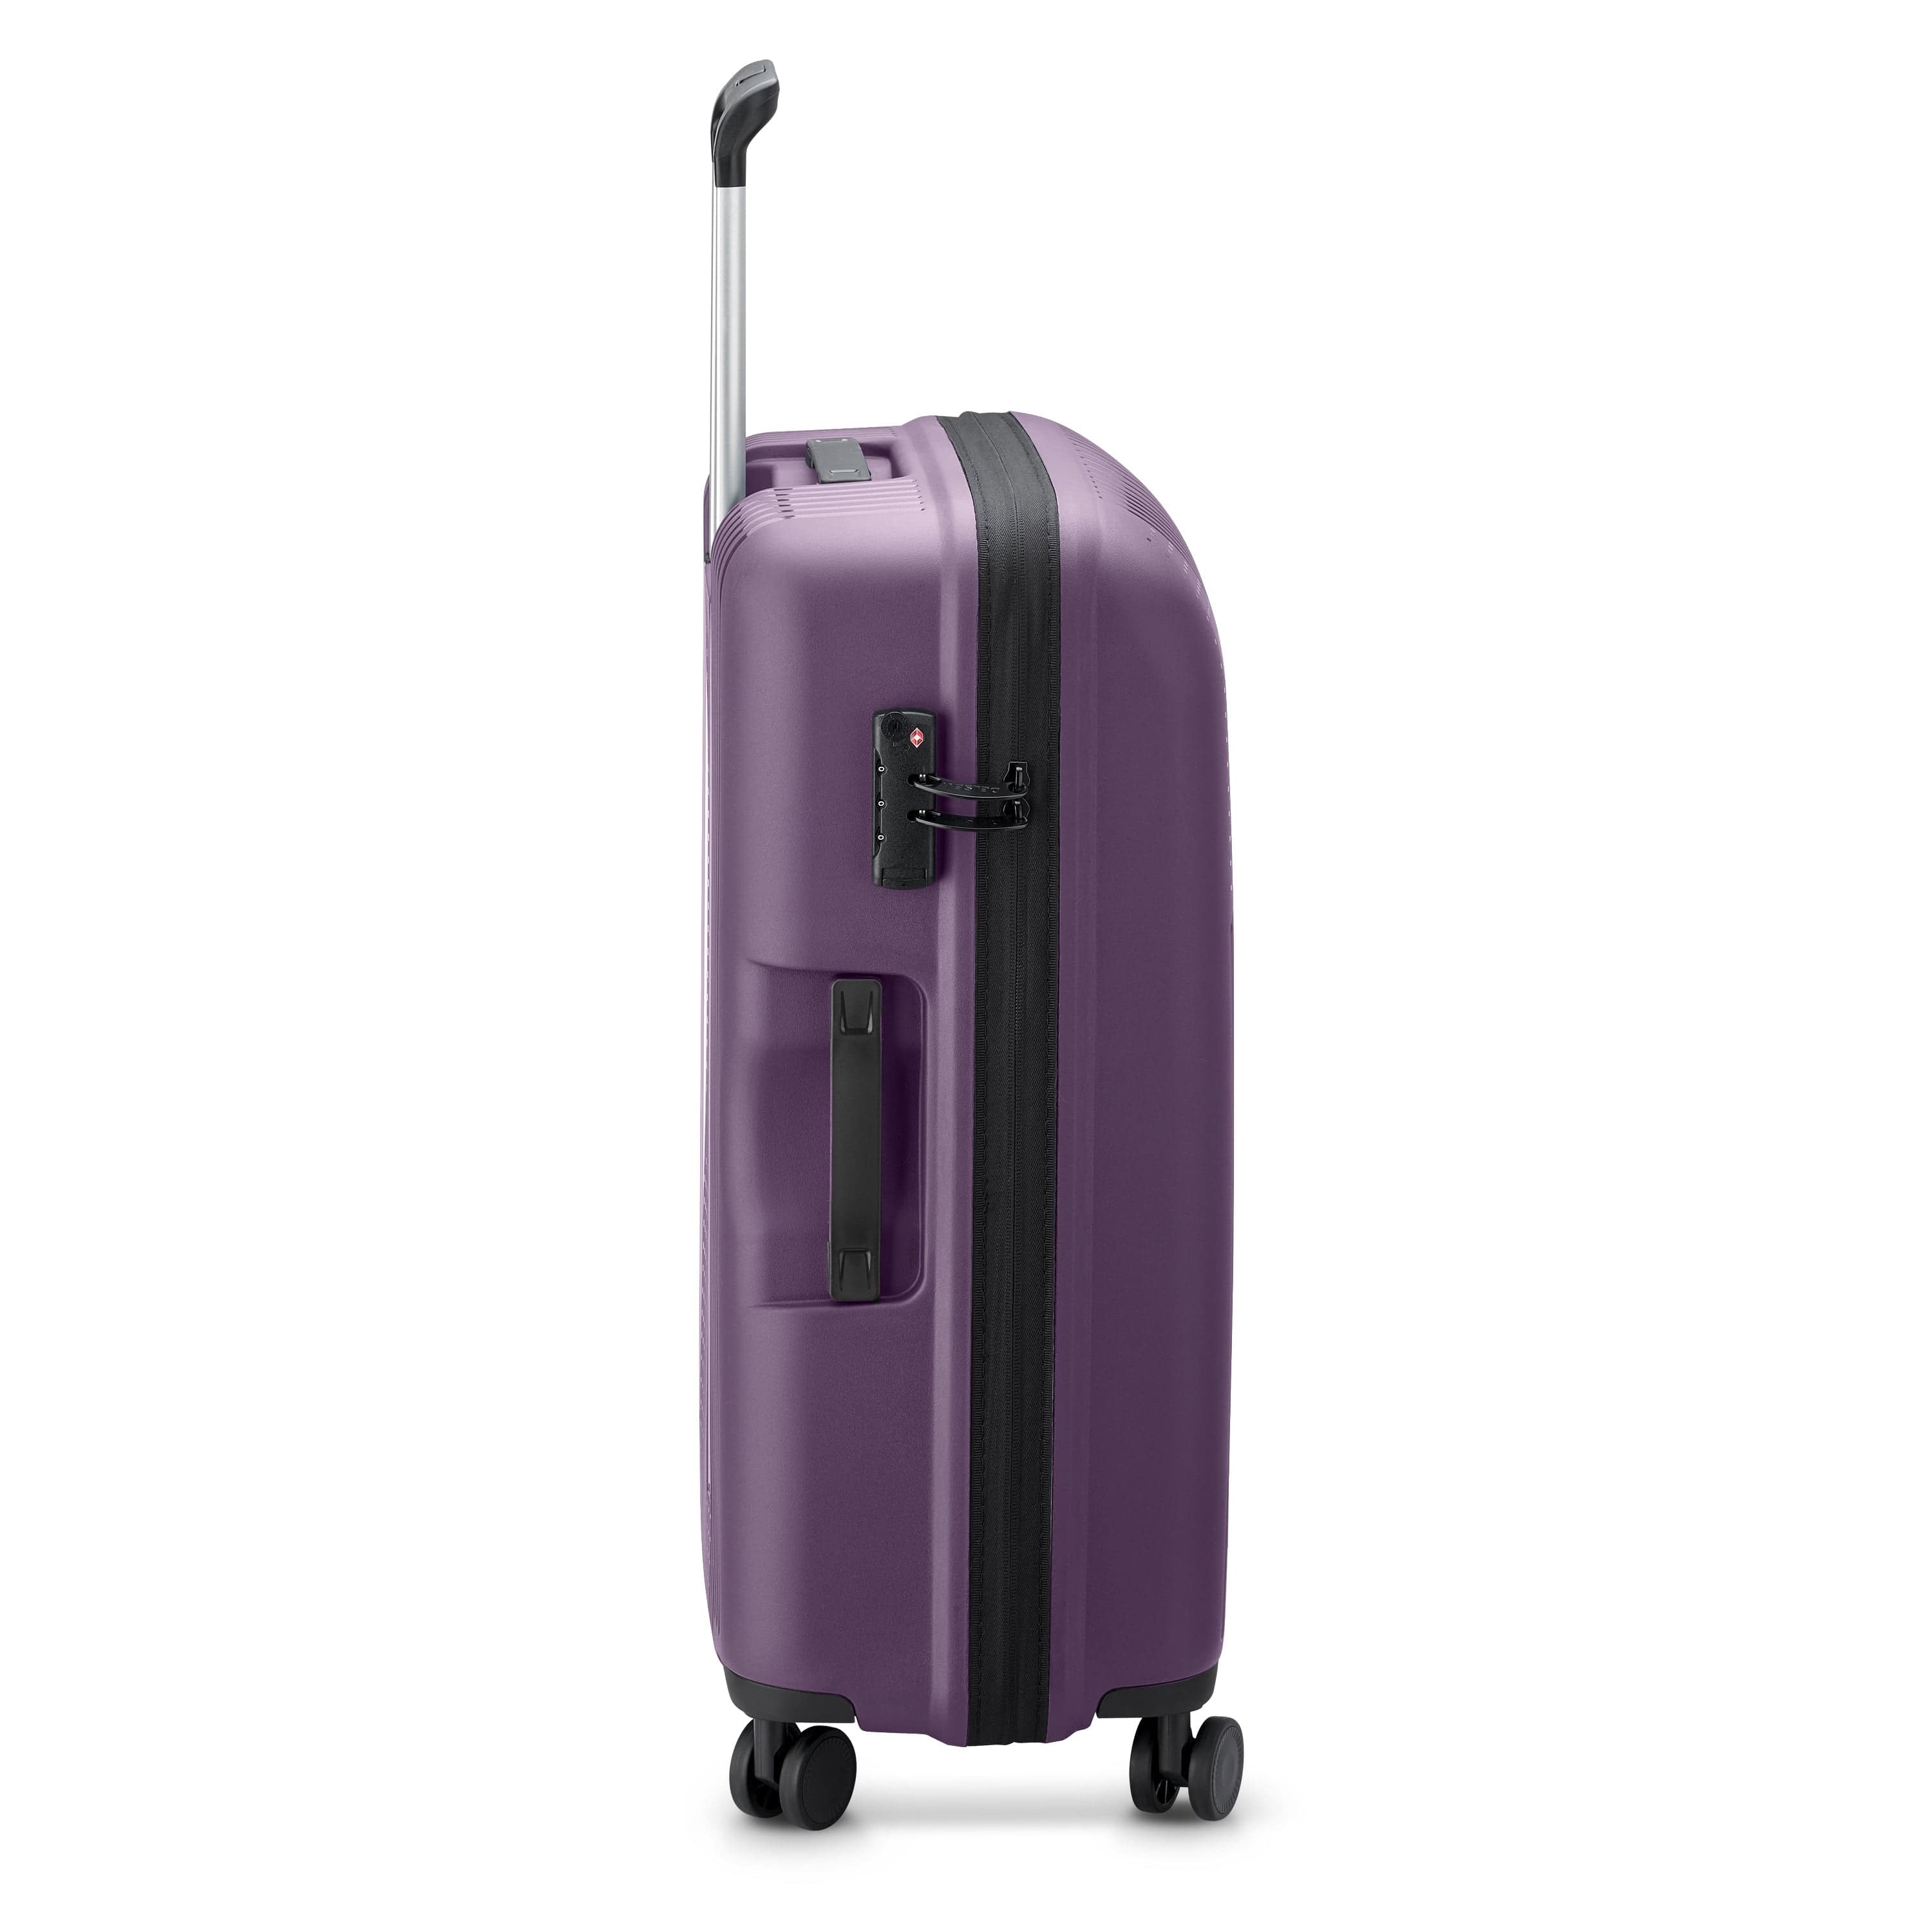 Delsey Ordener 66cm Hardcase 4 Double Wheel Check-In Luggage Trolley Purple - 00384681008